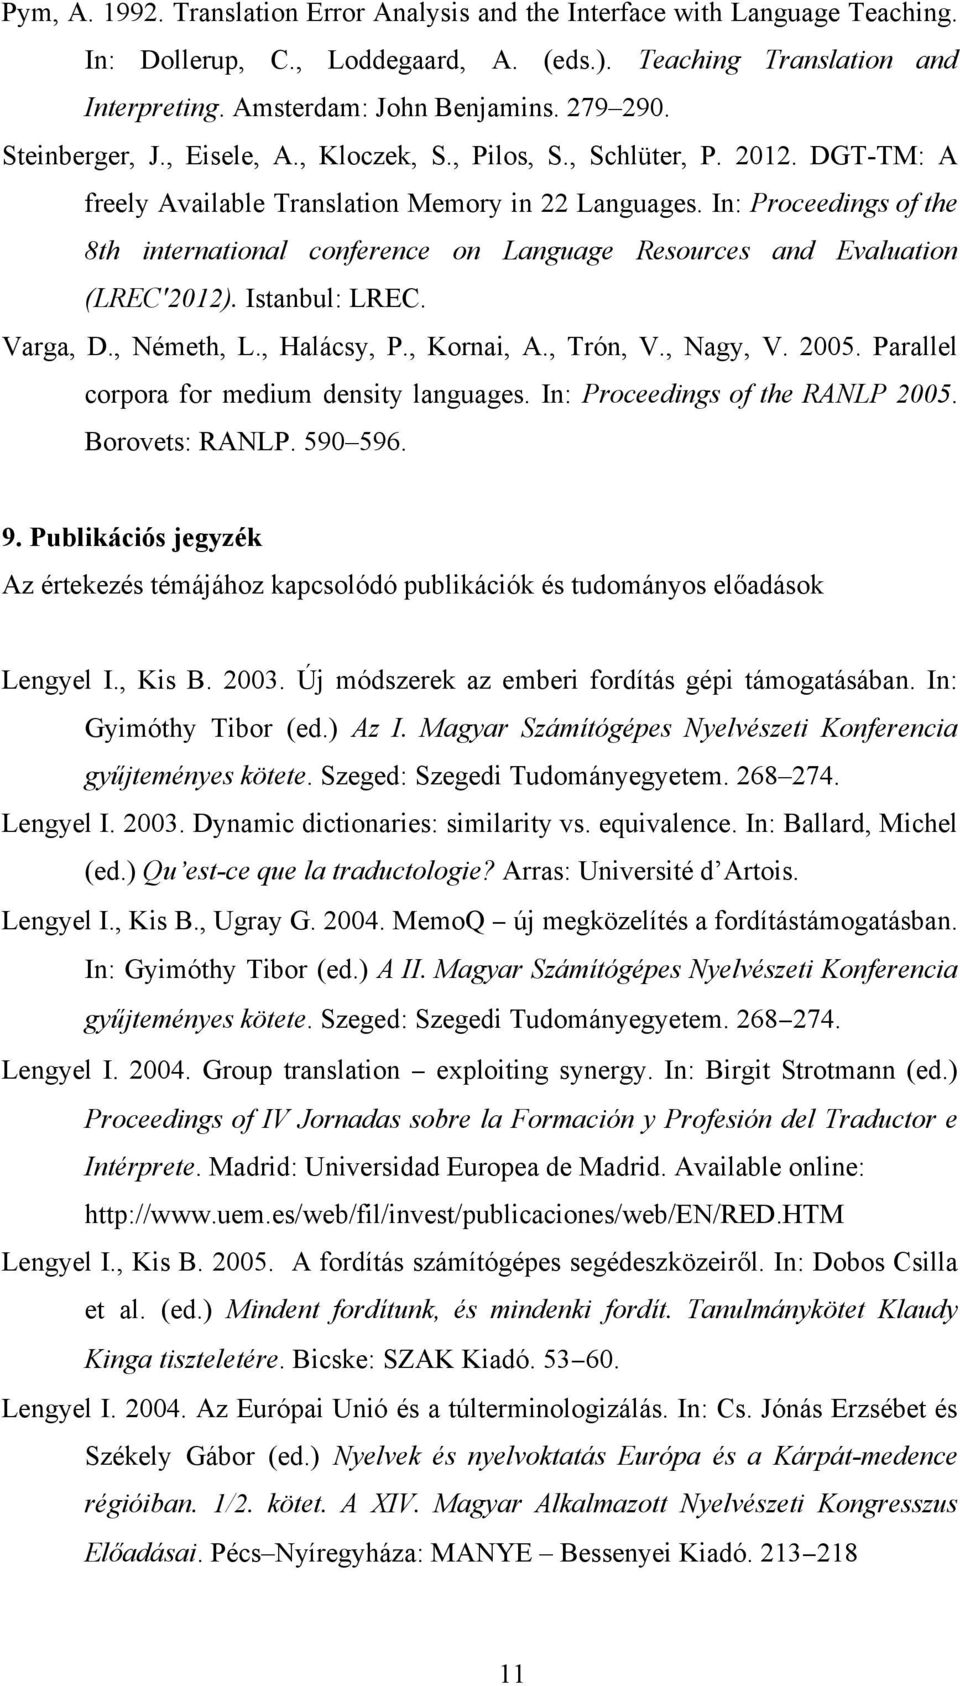 In: Proceedings of the 8th international conference on Language Resources and Evaluation (LREC'2012). Istanbul: LREC. Varga, D., Németh, L., Halácsy, P., Kornai, A., Trón, V., Nagy, V. 2005.